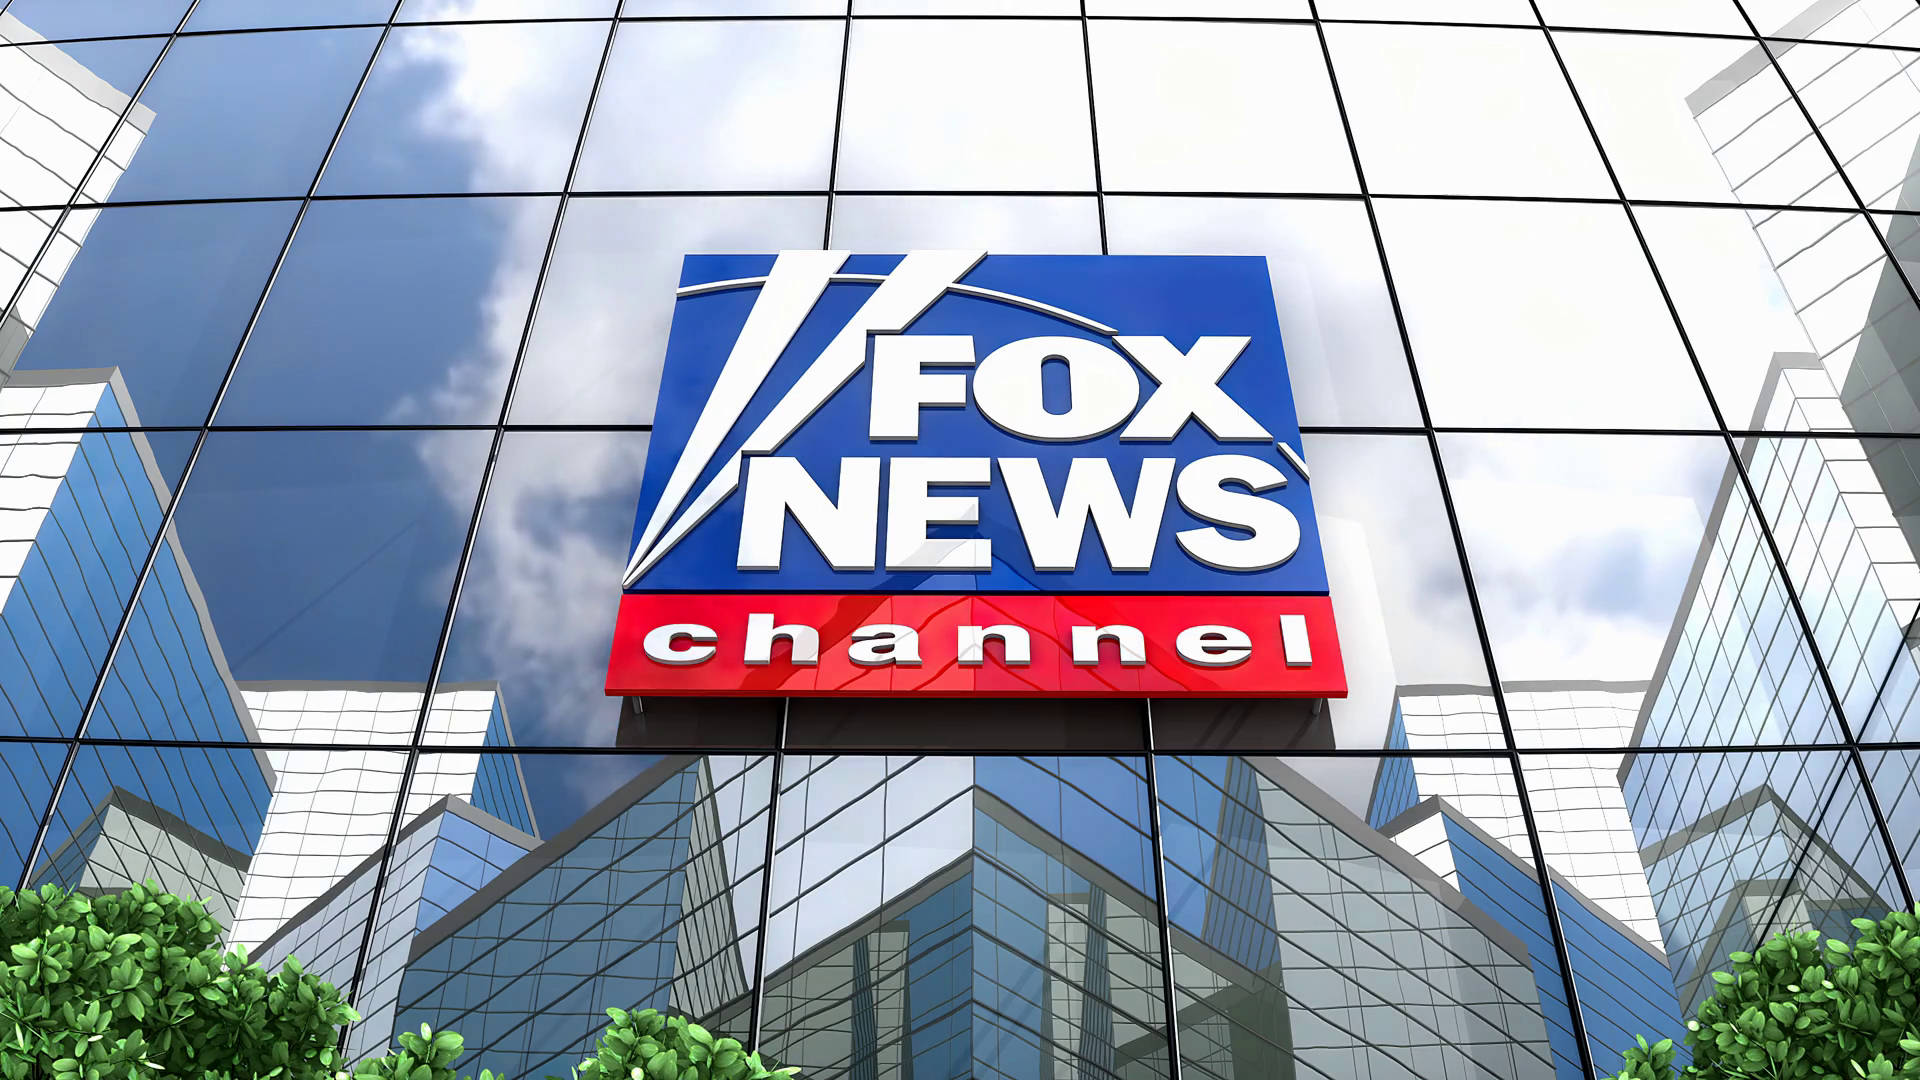 Fox News Channel Wall Signage